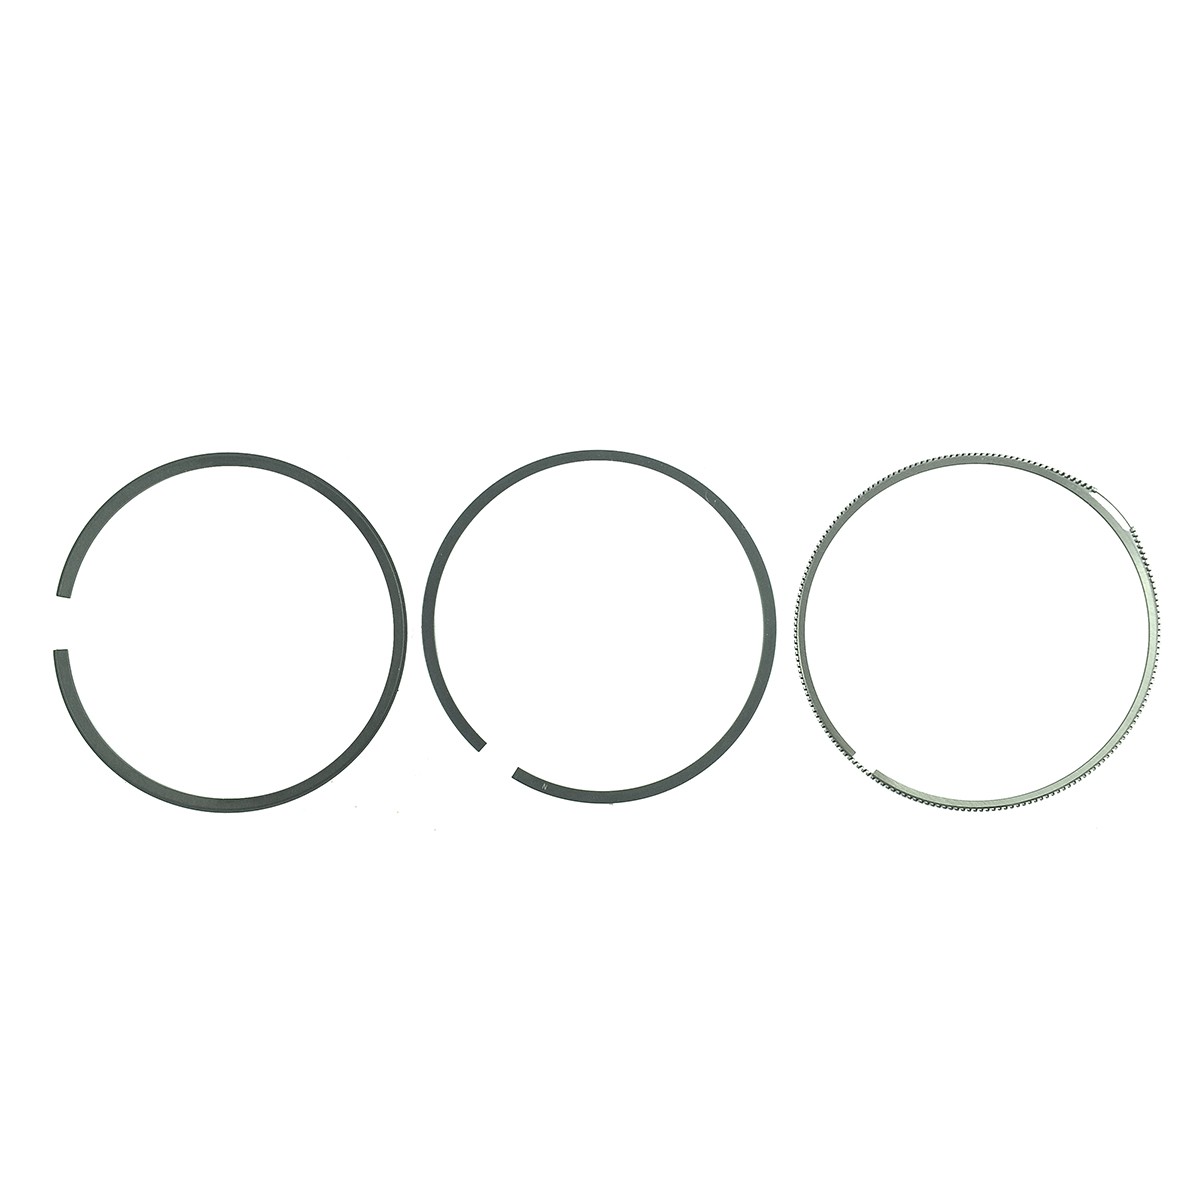 Piston rings / Ø 87 mm / 2 x 2 x 2 mm / Kubota V2403 / Kubota DC70/L5018 / 6-26-100-79